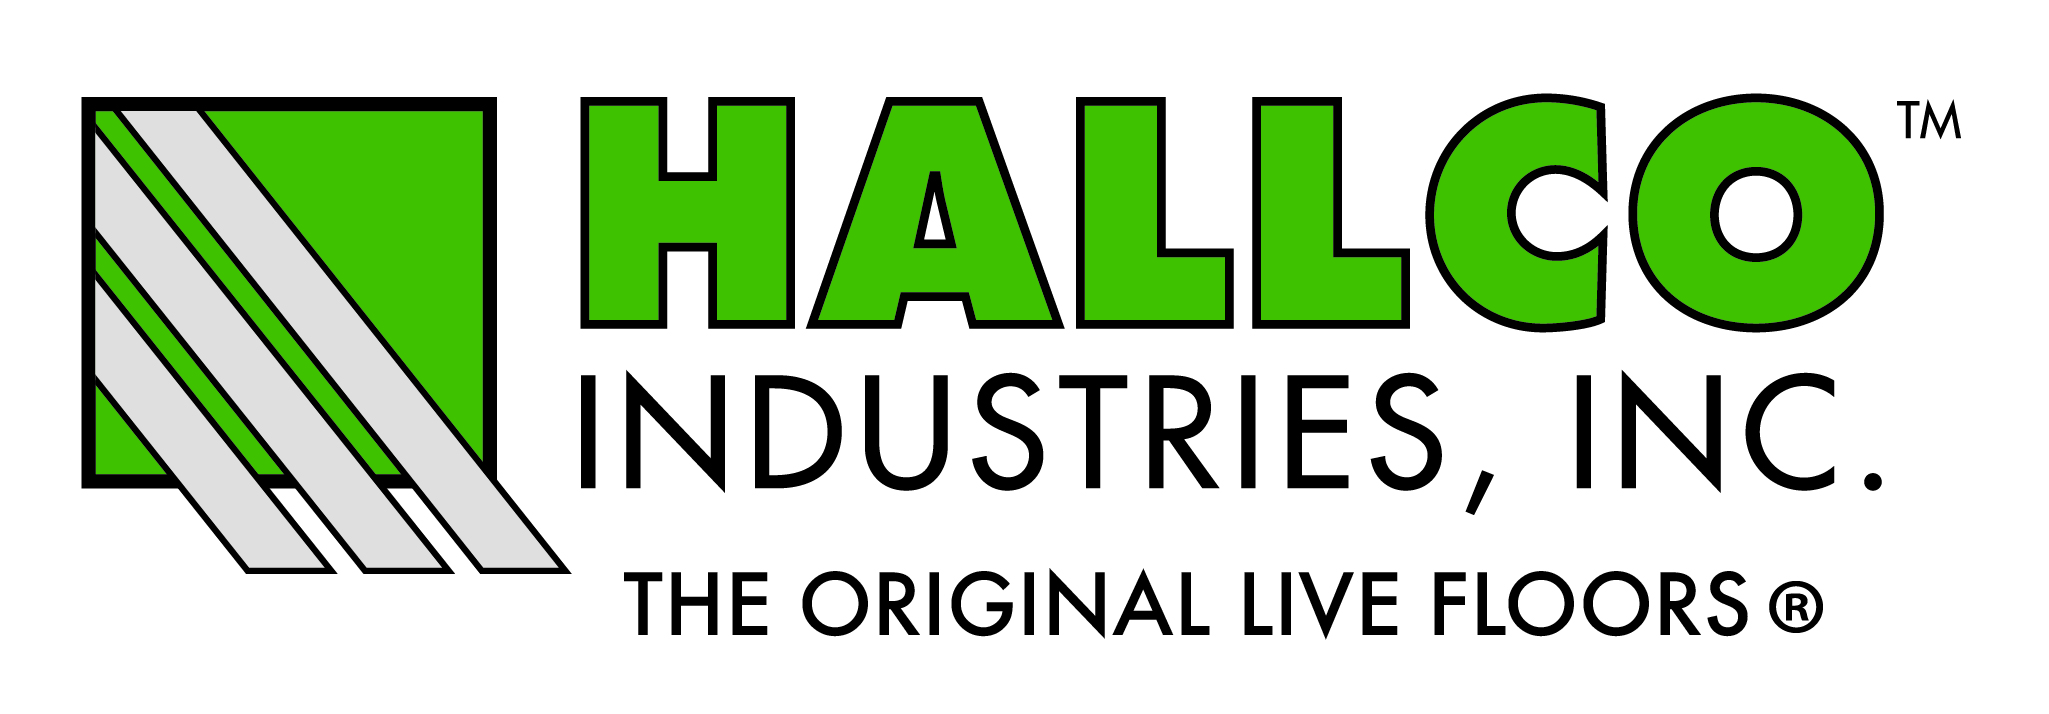 Hallco Industries Inc.